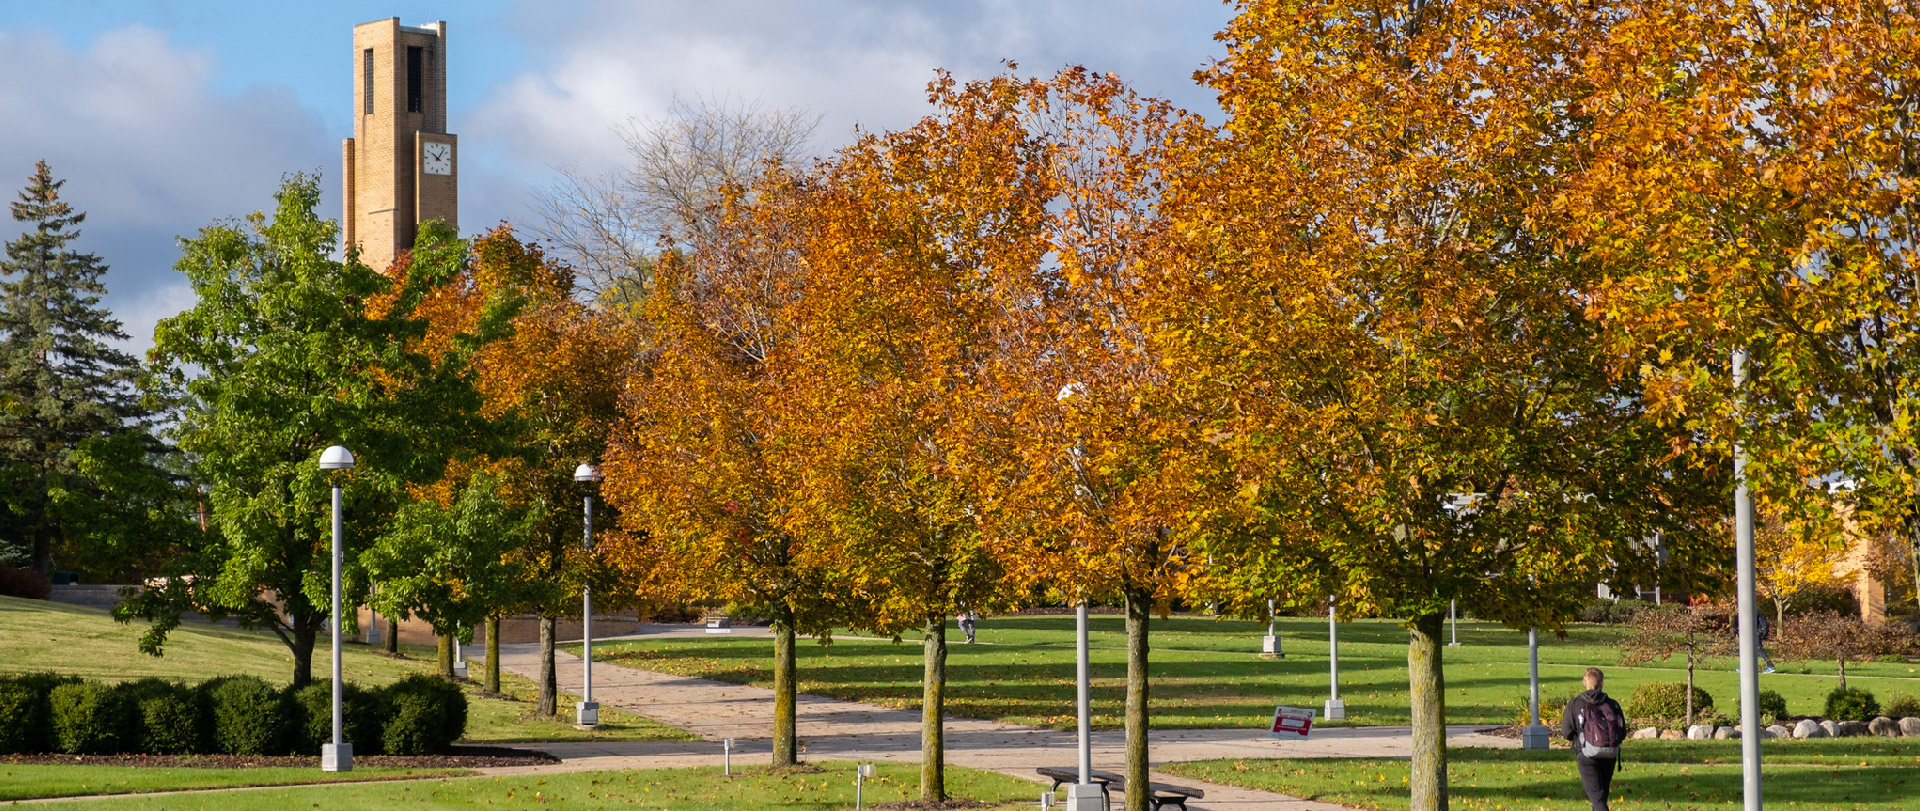 A fall scene on the campus of Ferris State University in Big Rapids, MI